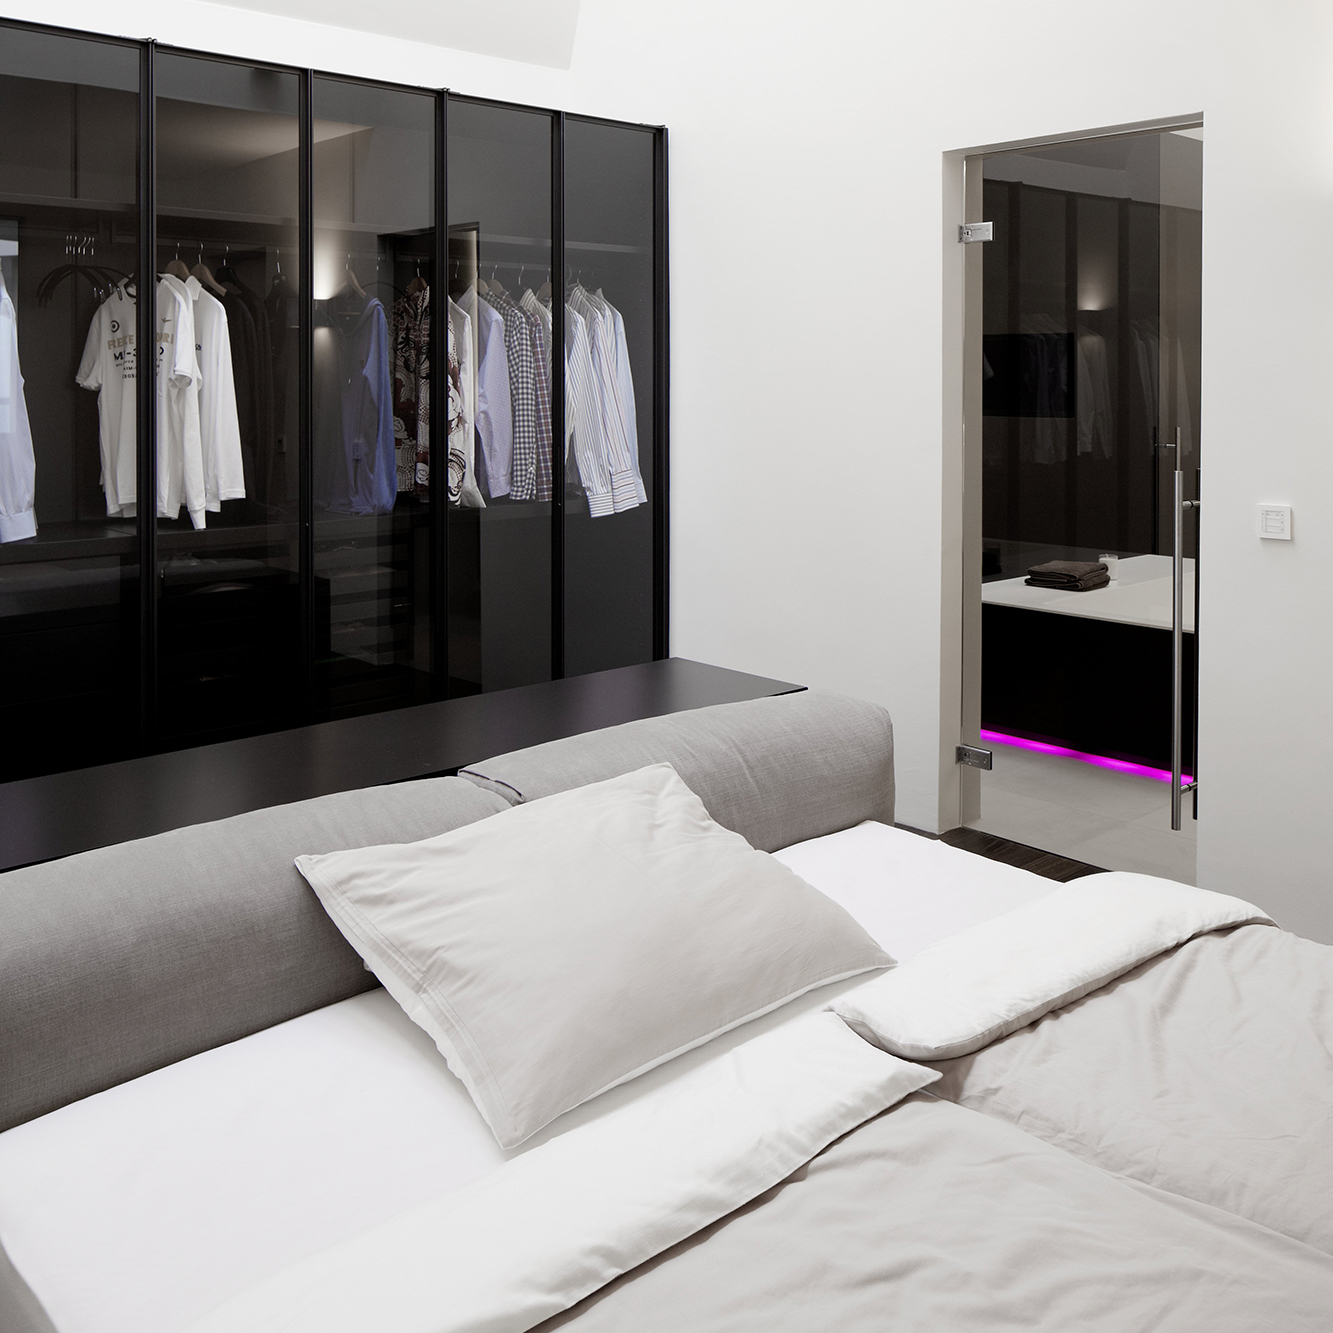 Porro, image:contract_immagini - Porro Spa - Linearity and elegance with Pull-out sliding wardrobe - Wien (Austria)